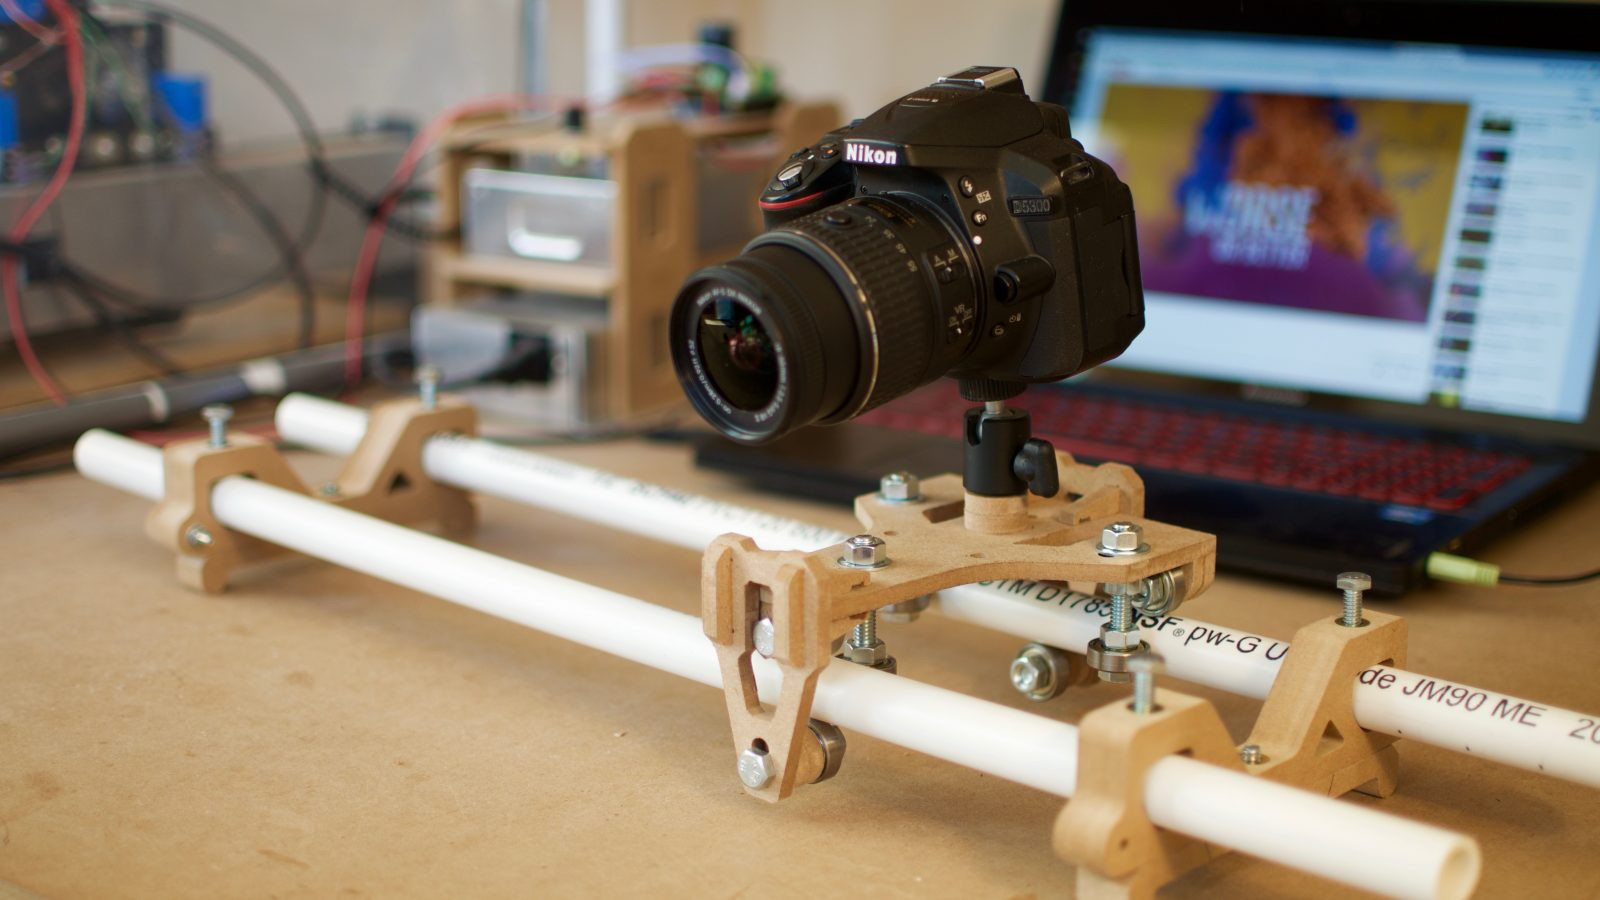 Best ideas about DIY Camera Slider
. Save or Pin DIY Camera Slider Plans v3 3 Experimental Winston Moy Now.